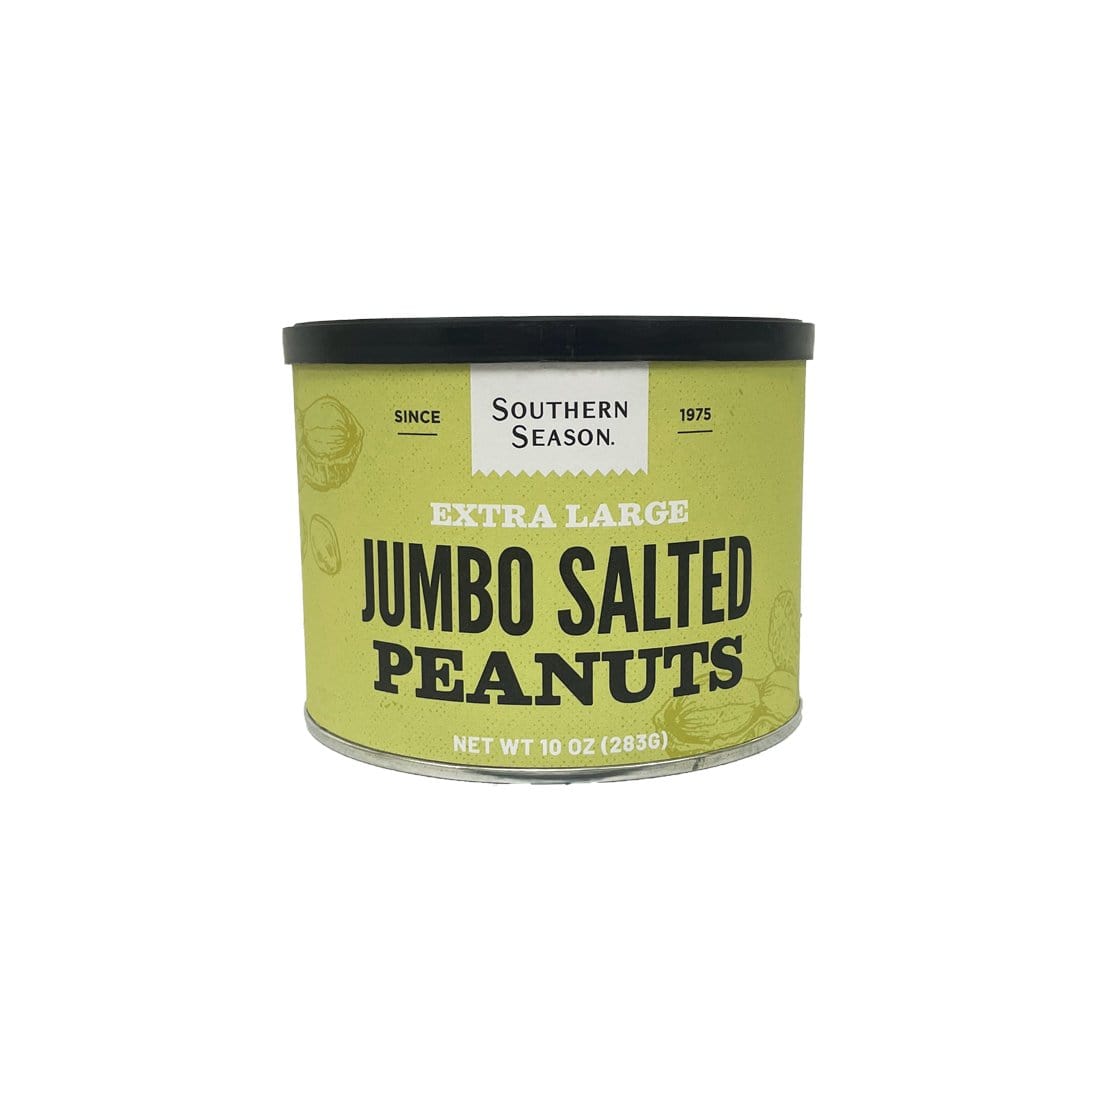 Southern Season Southern Season Jumbo Salted Peanuts 10 oz